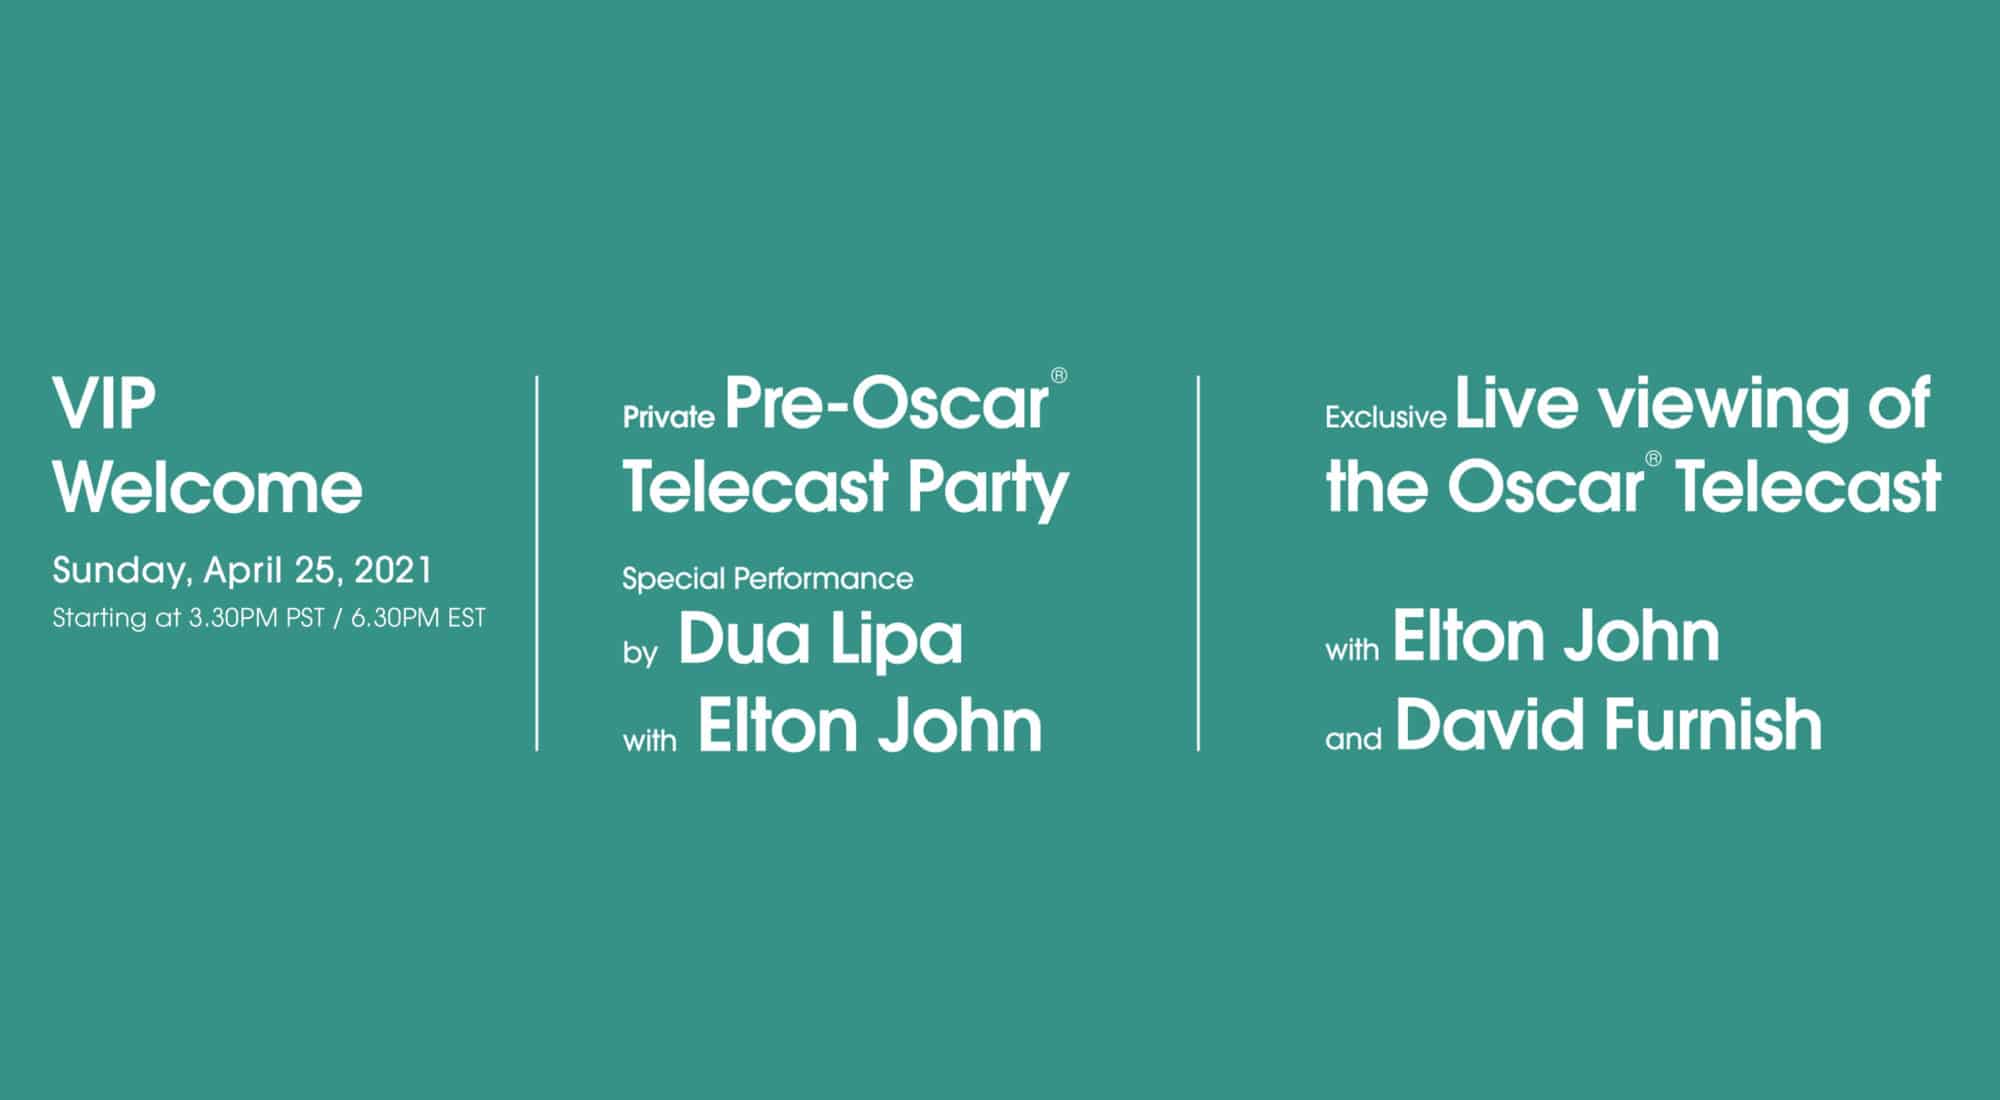 Elton John's Oscars celebrations going virtual with Dua Lipa